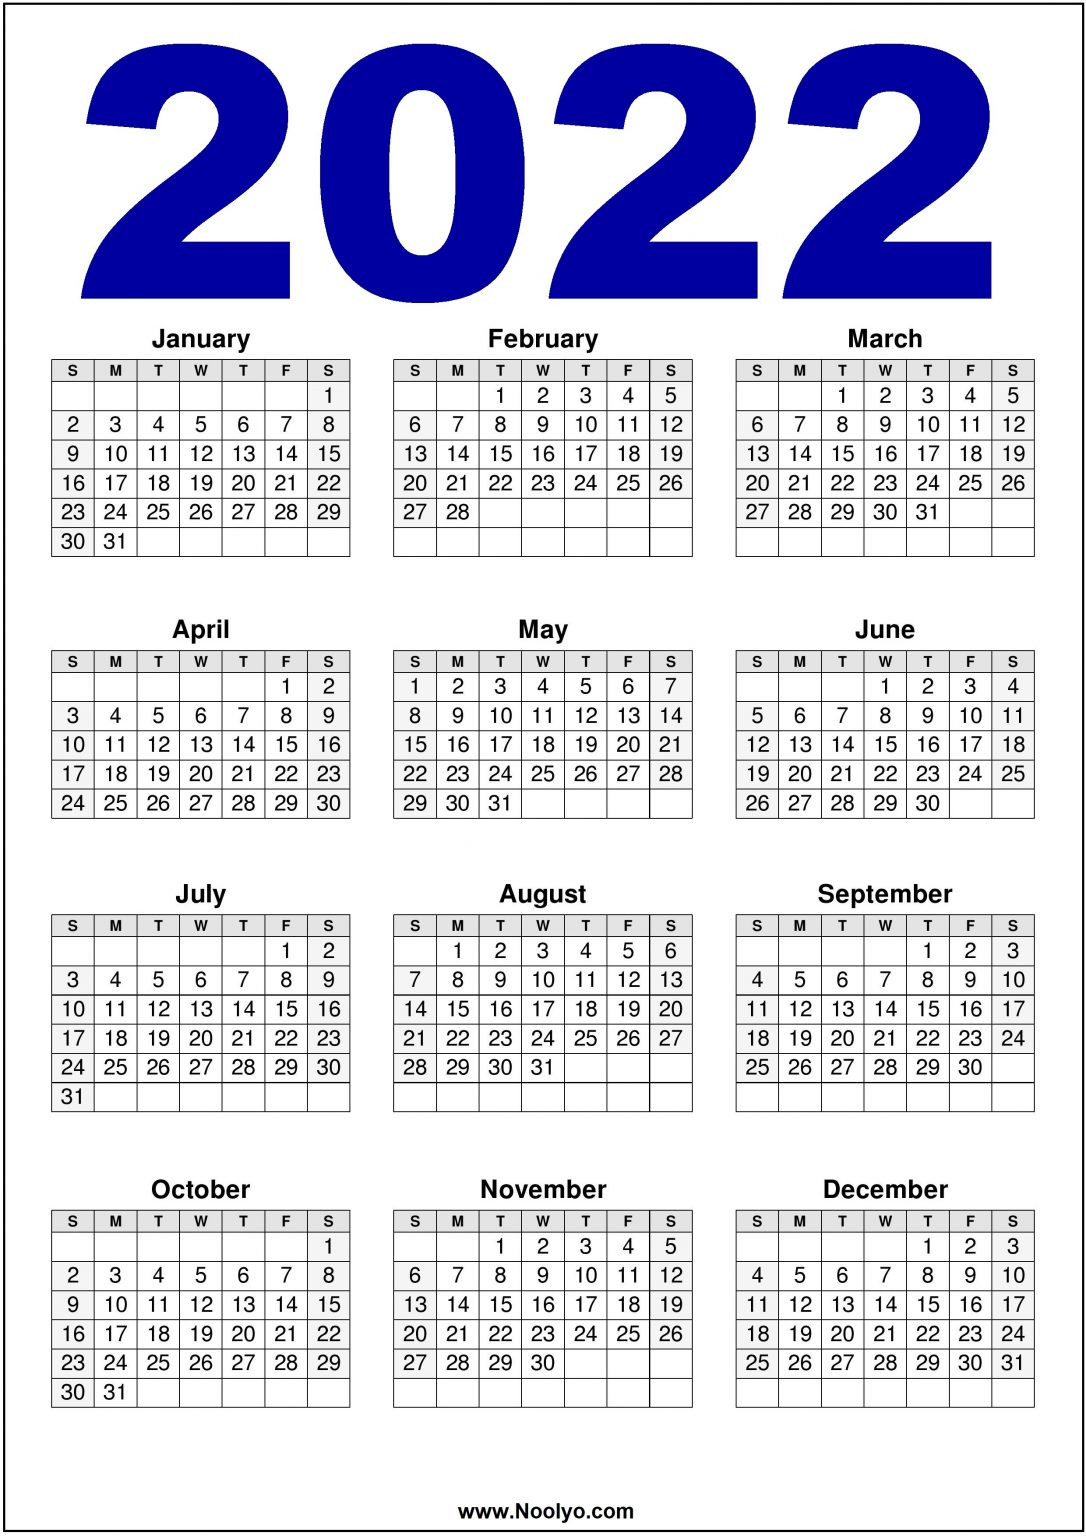 2022 Calendar Us Printable - Download Free - Noolyo  Free Printable Calendar 2022.Com